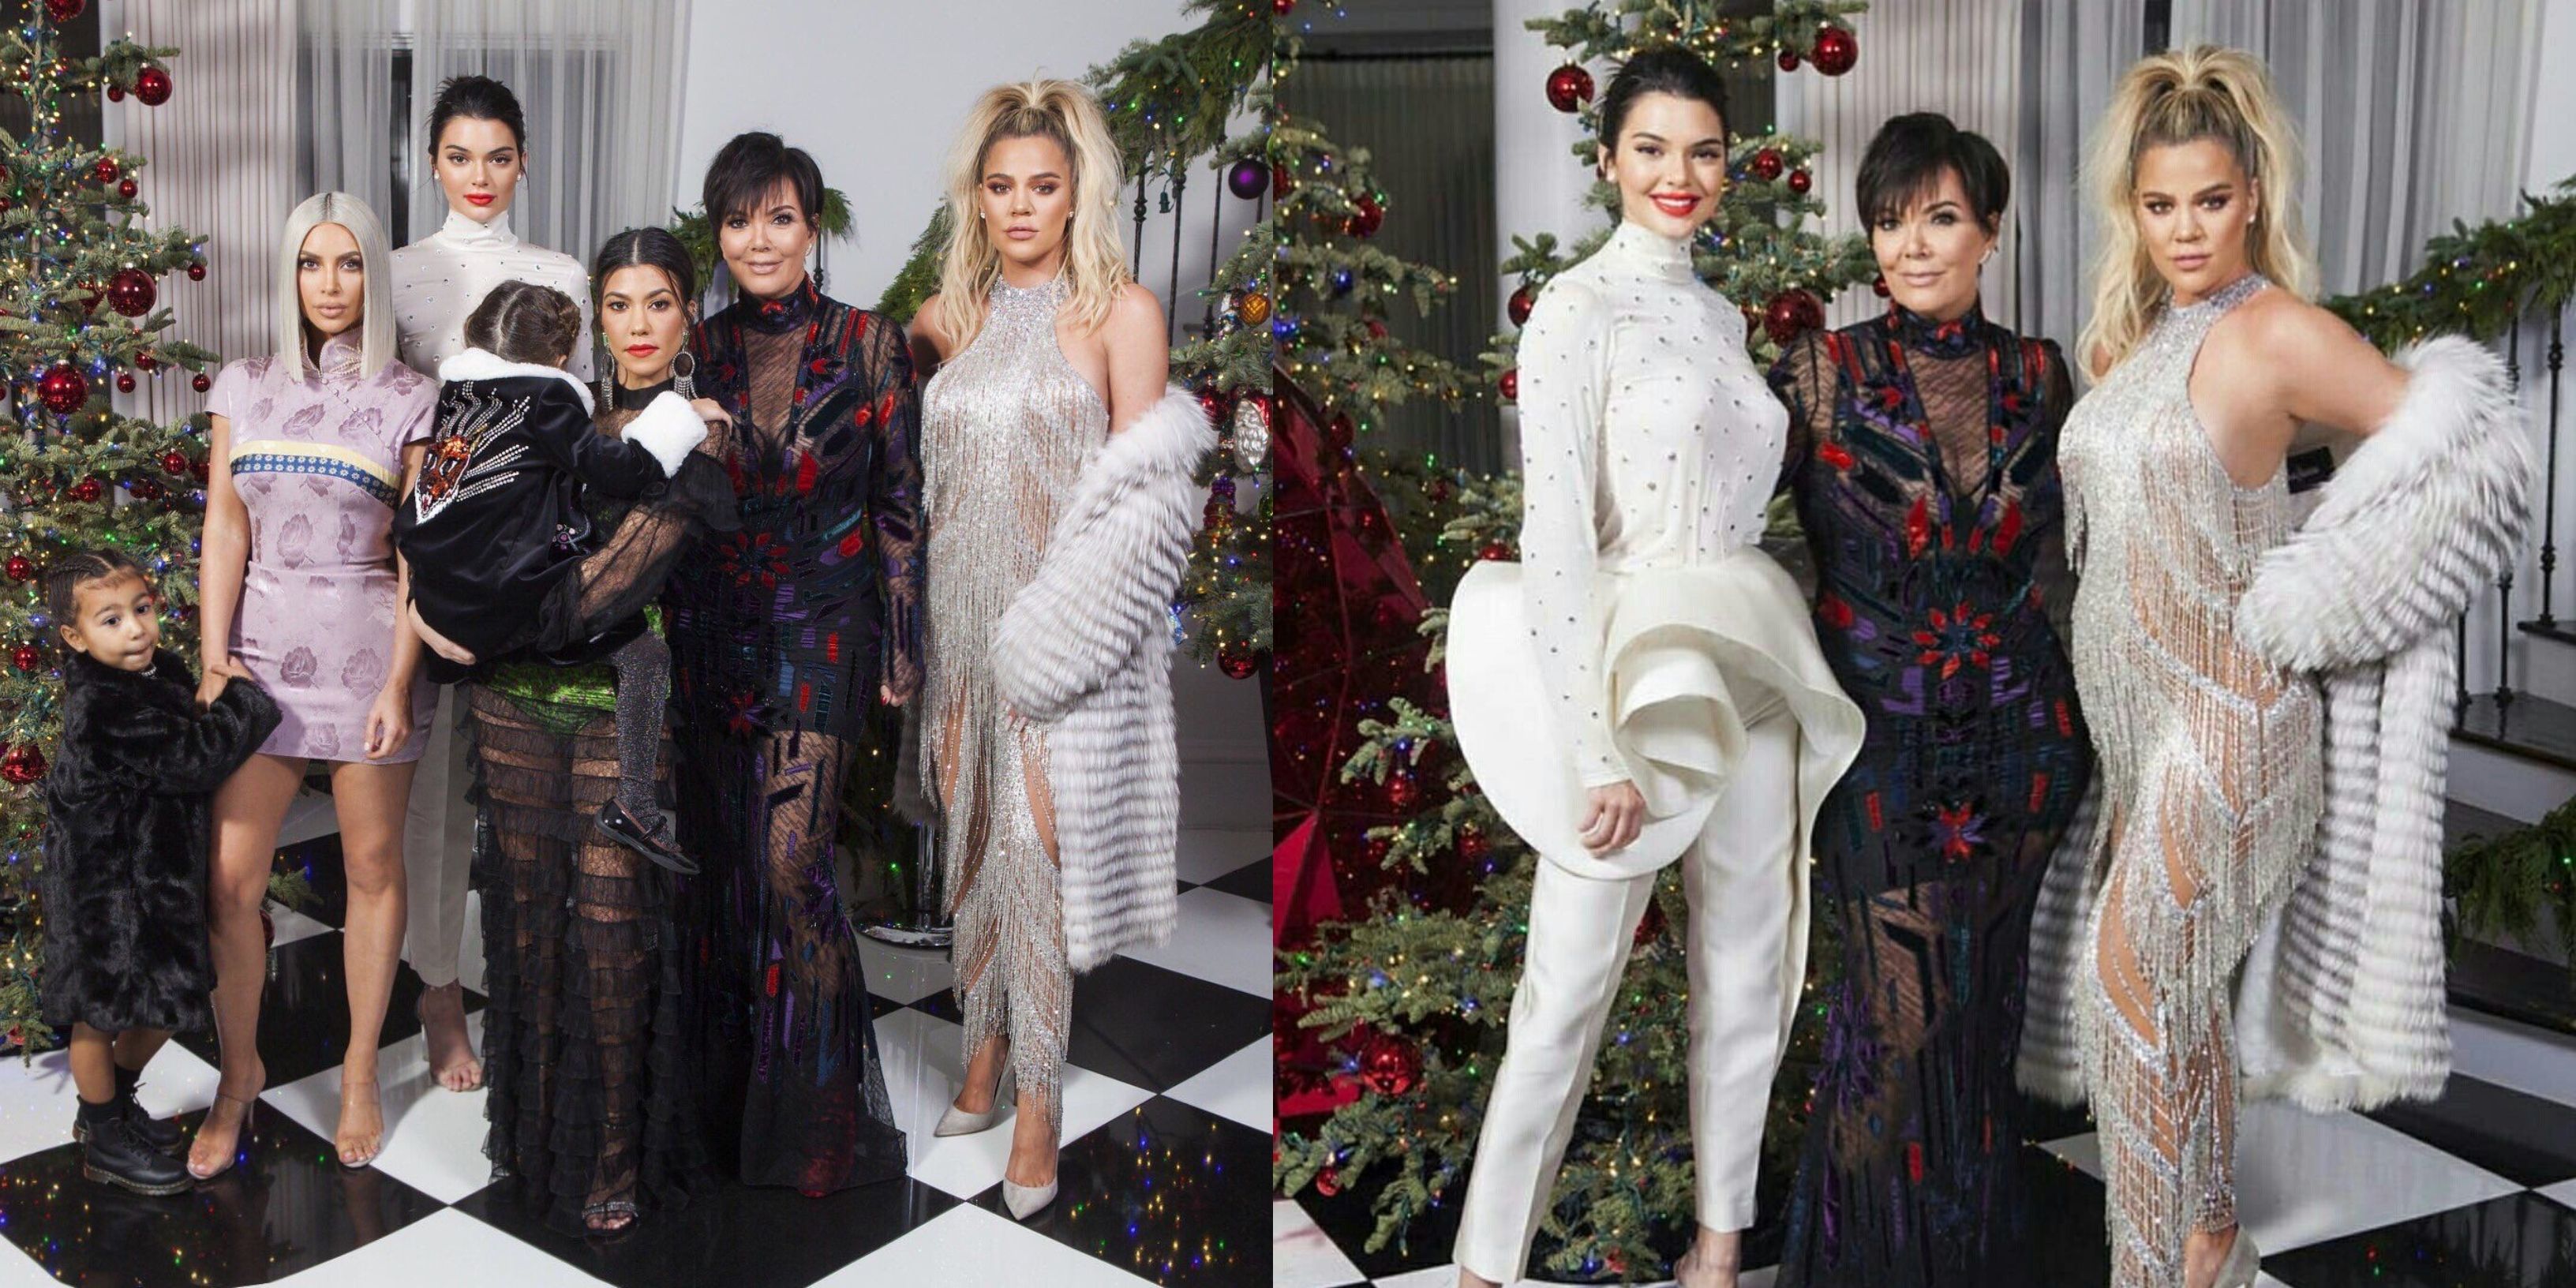 The Kardashian family Christmas in 2017